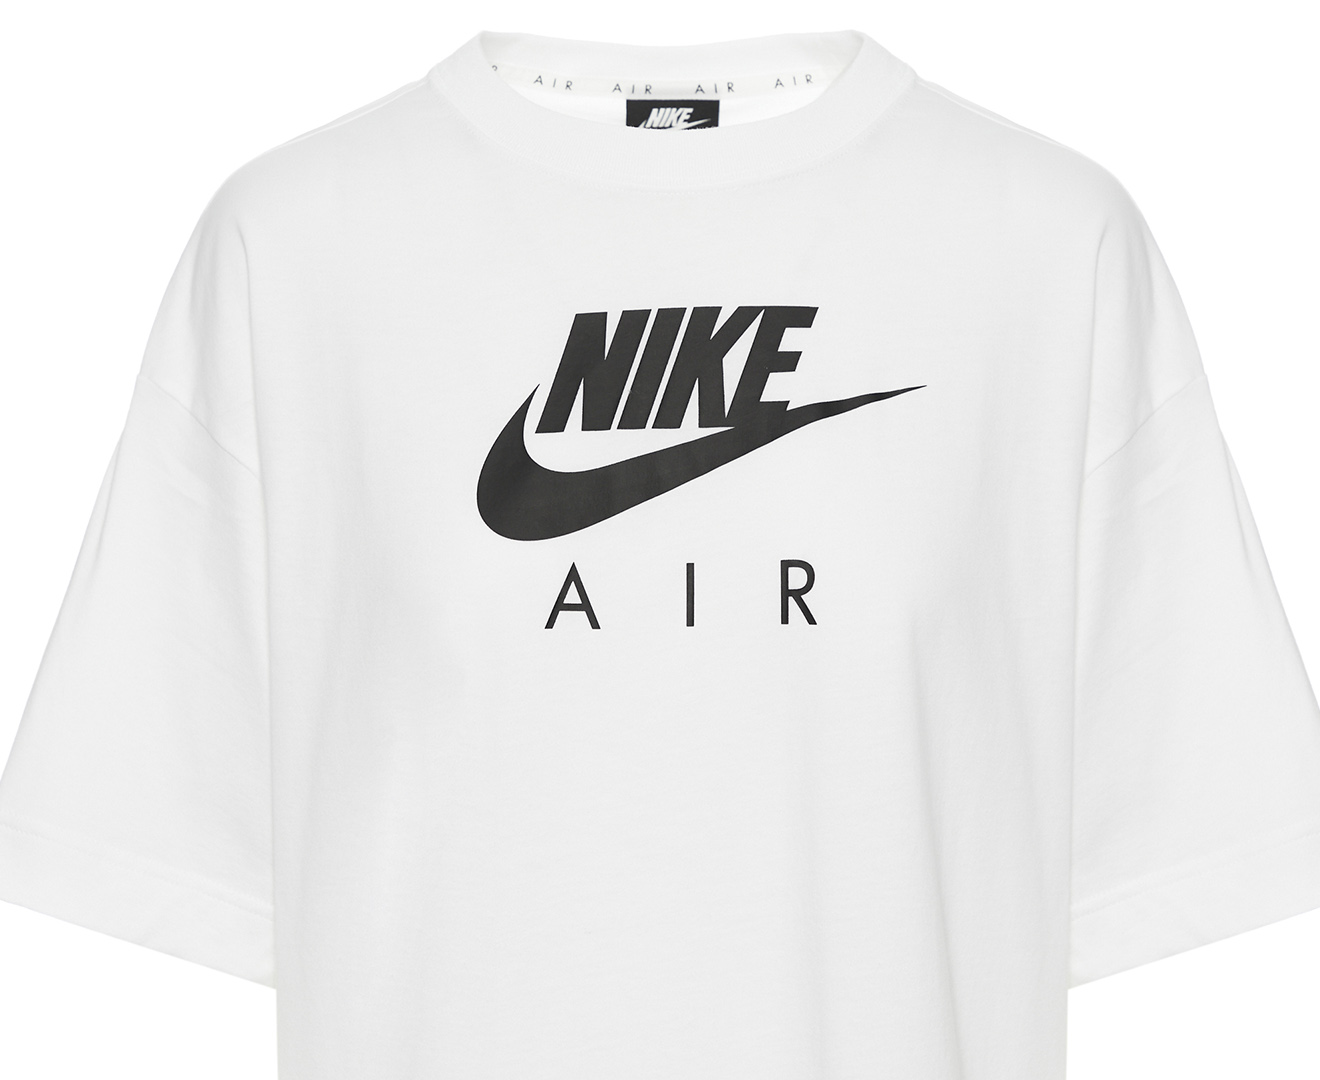 Nike Women's Air Tee / T-Shirt / T-Shirt - White | Catch.co.nz